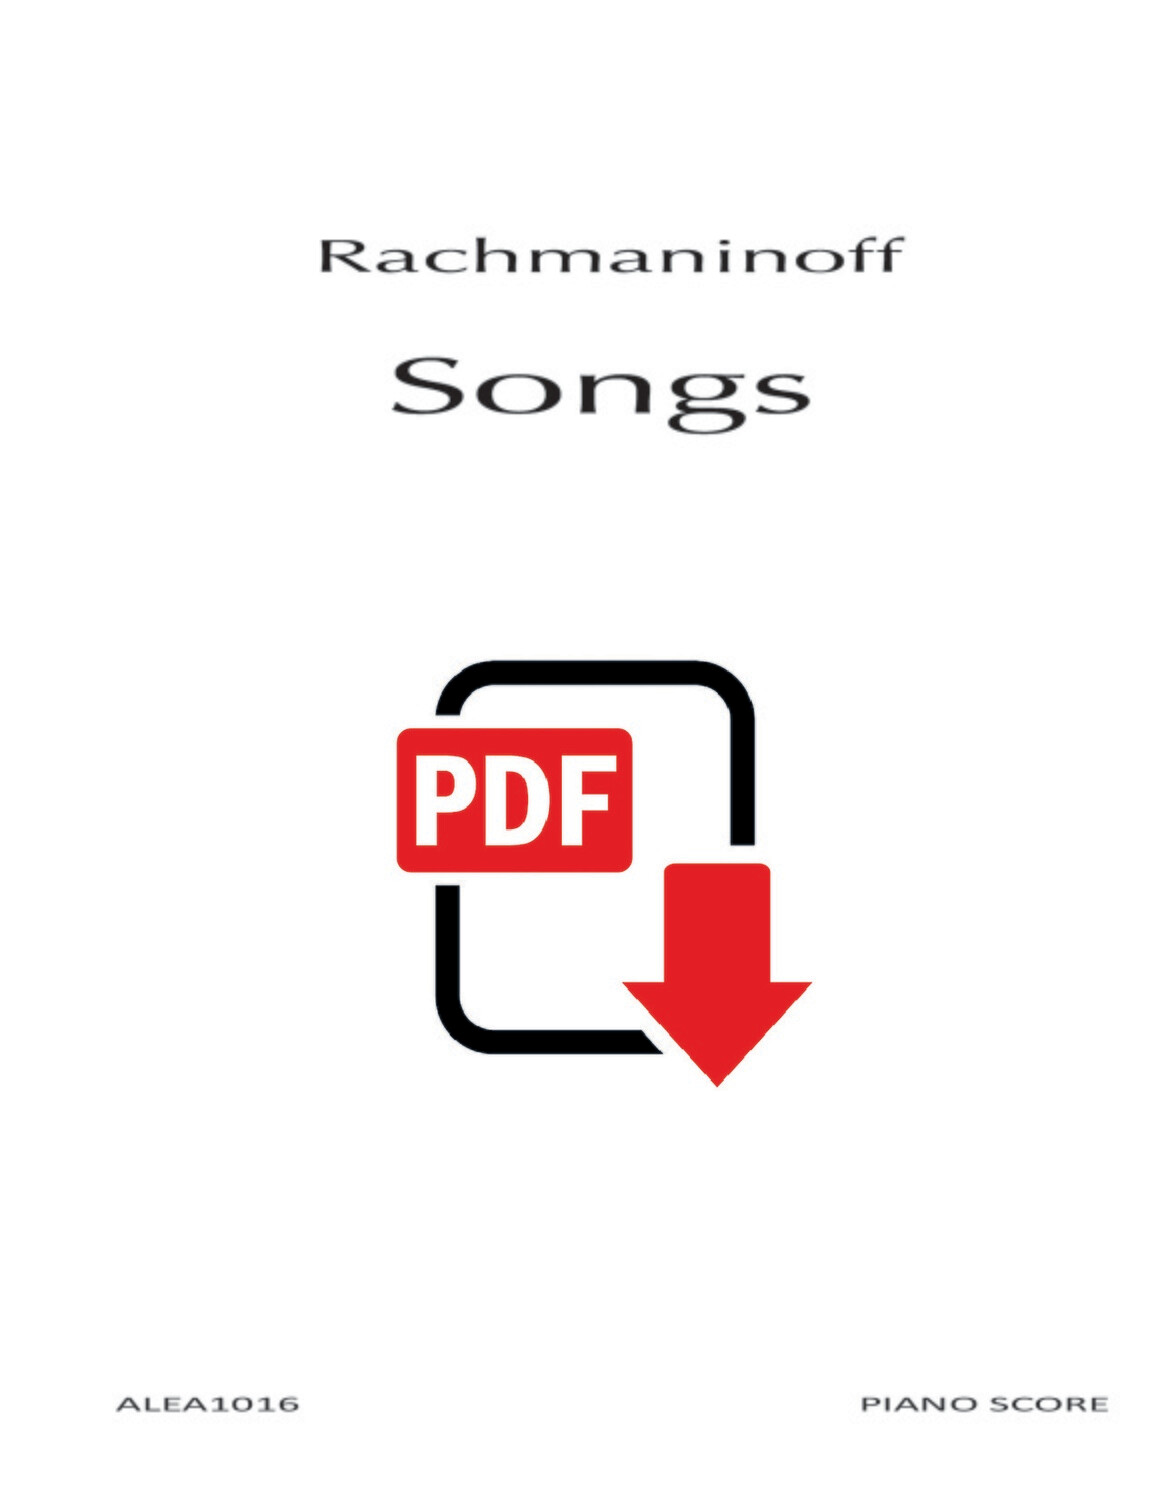 Rachmaninoff: Songs (PDF)